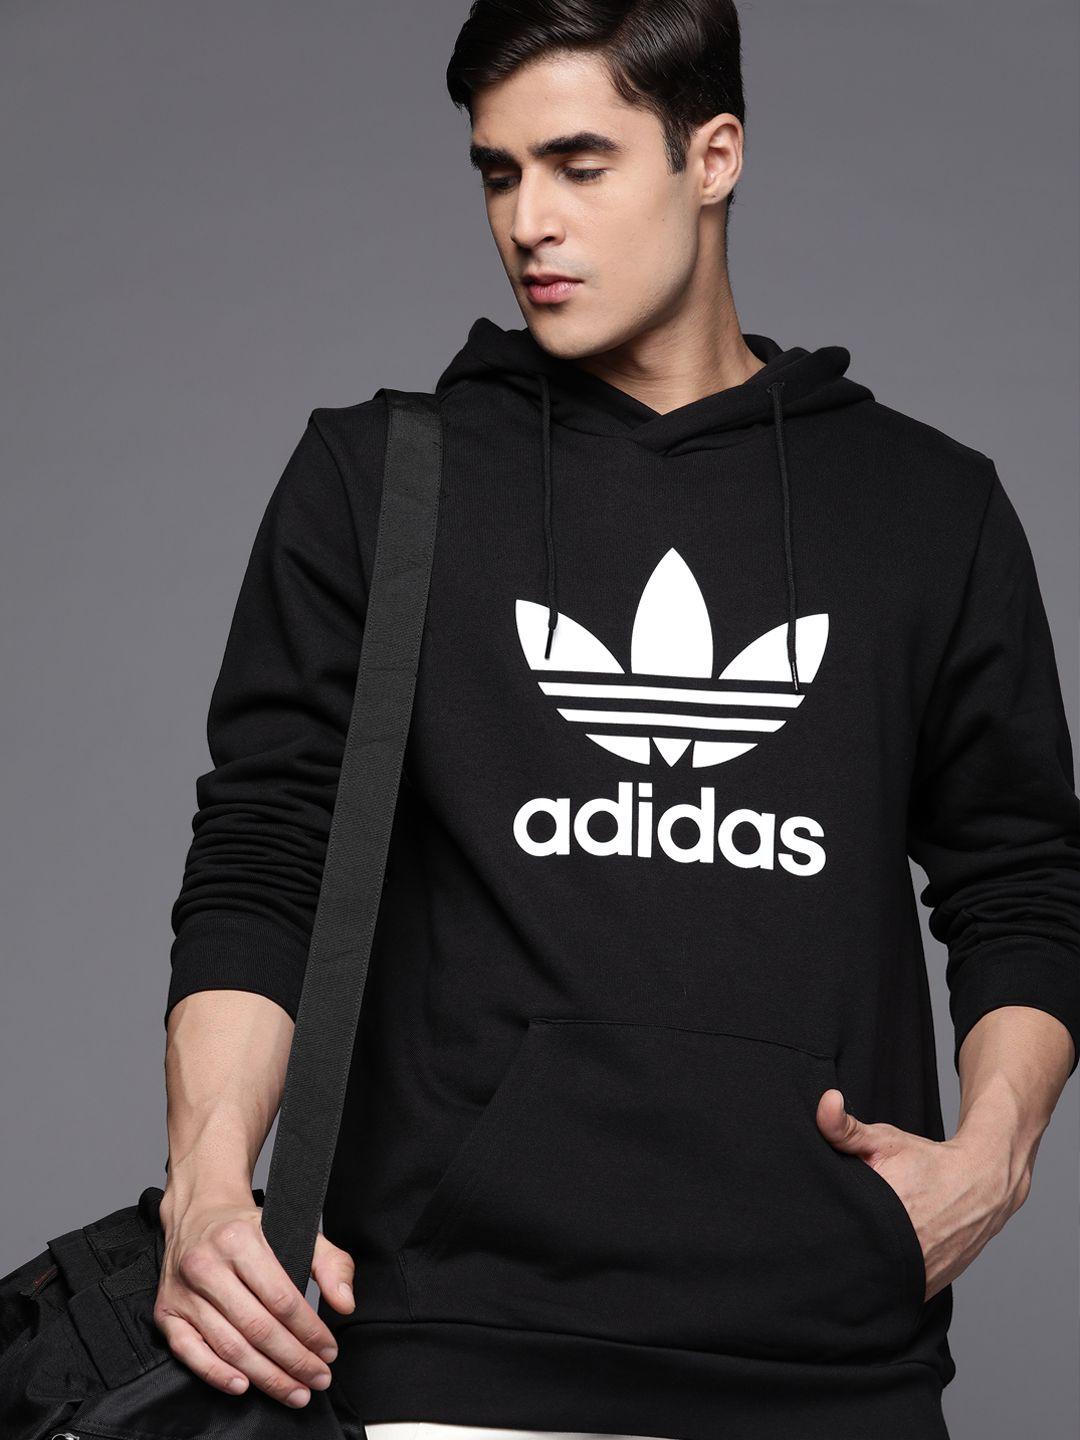 adidas originals men black trefoil hoody printed pure cotton sweatshirt